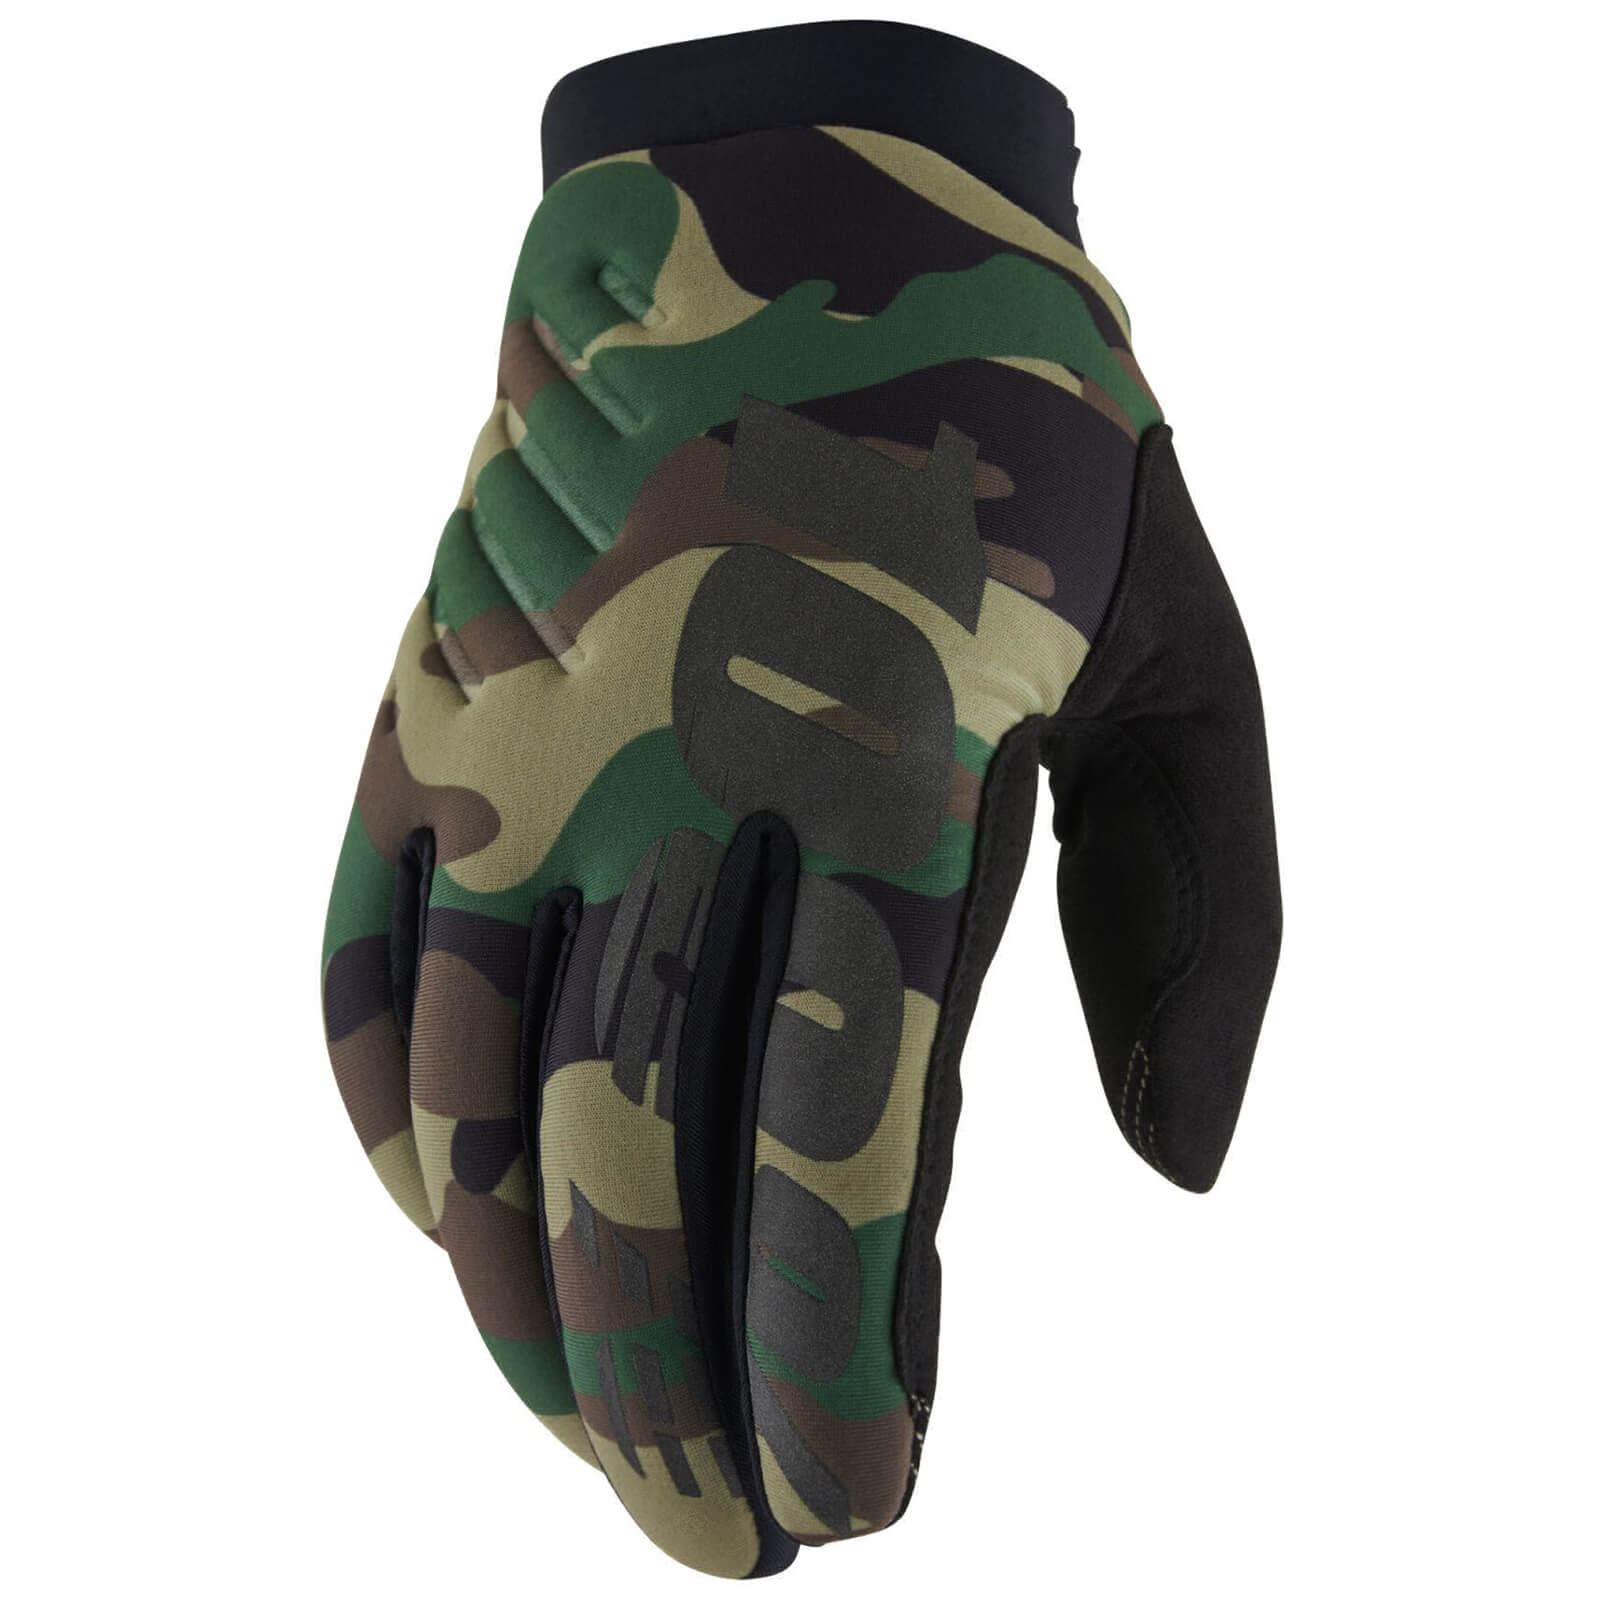 100% Brisker MTB Gloves - M - Camo/Black